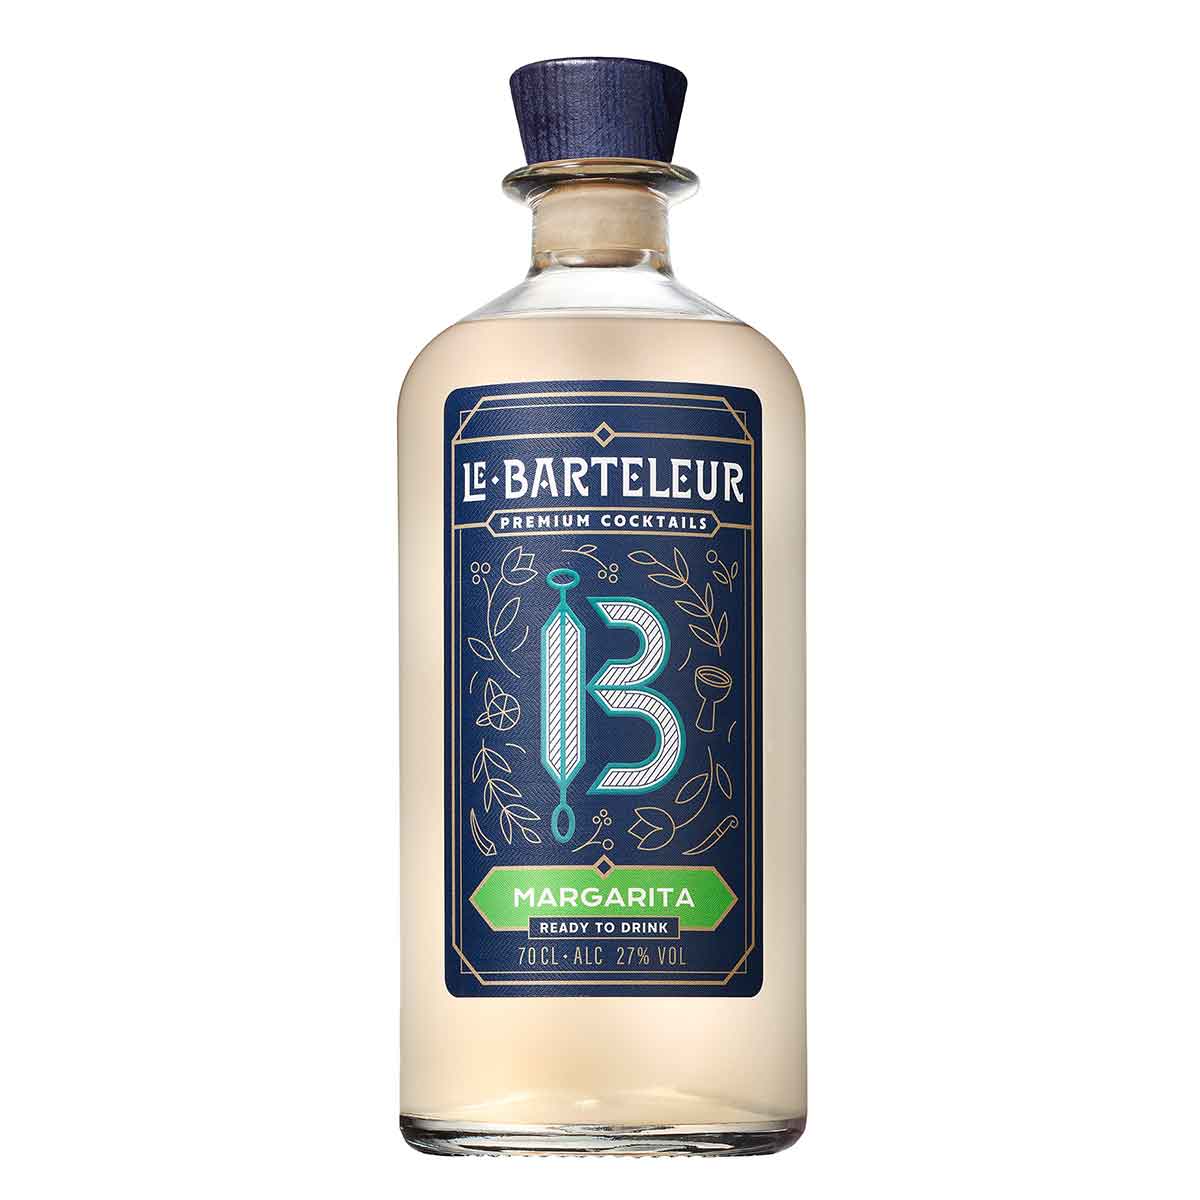 LE BARTELEUR Margarita - Premixed Cocktail - 27% ABV